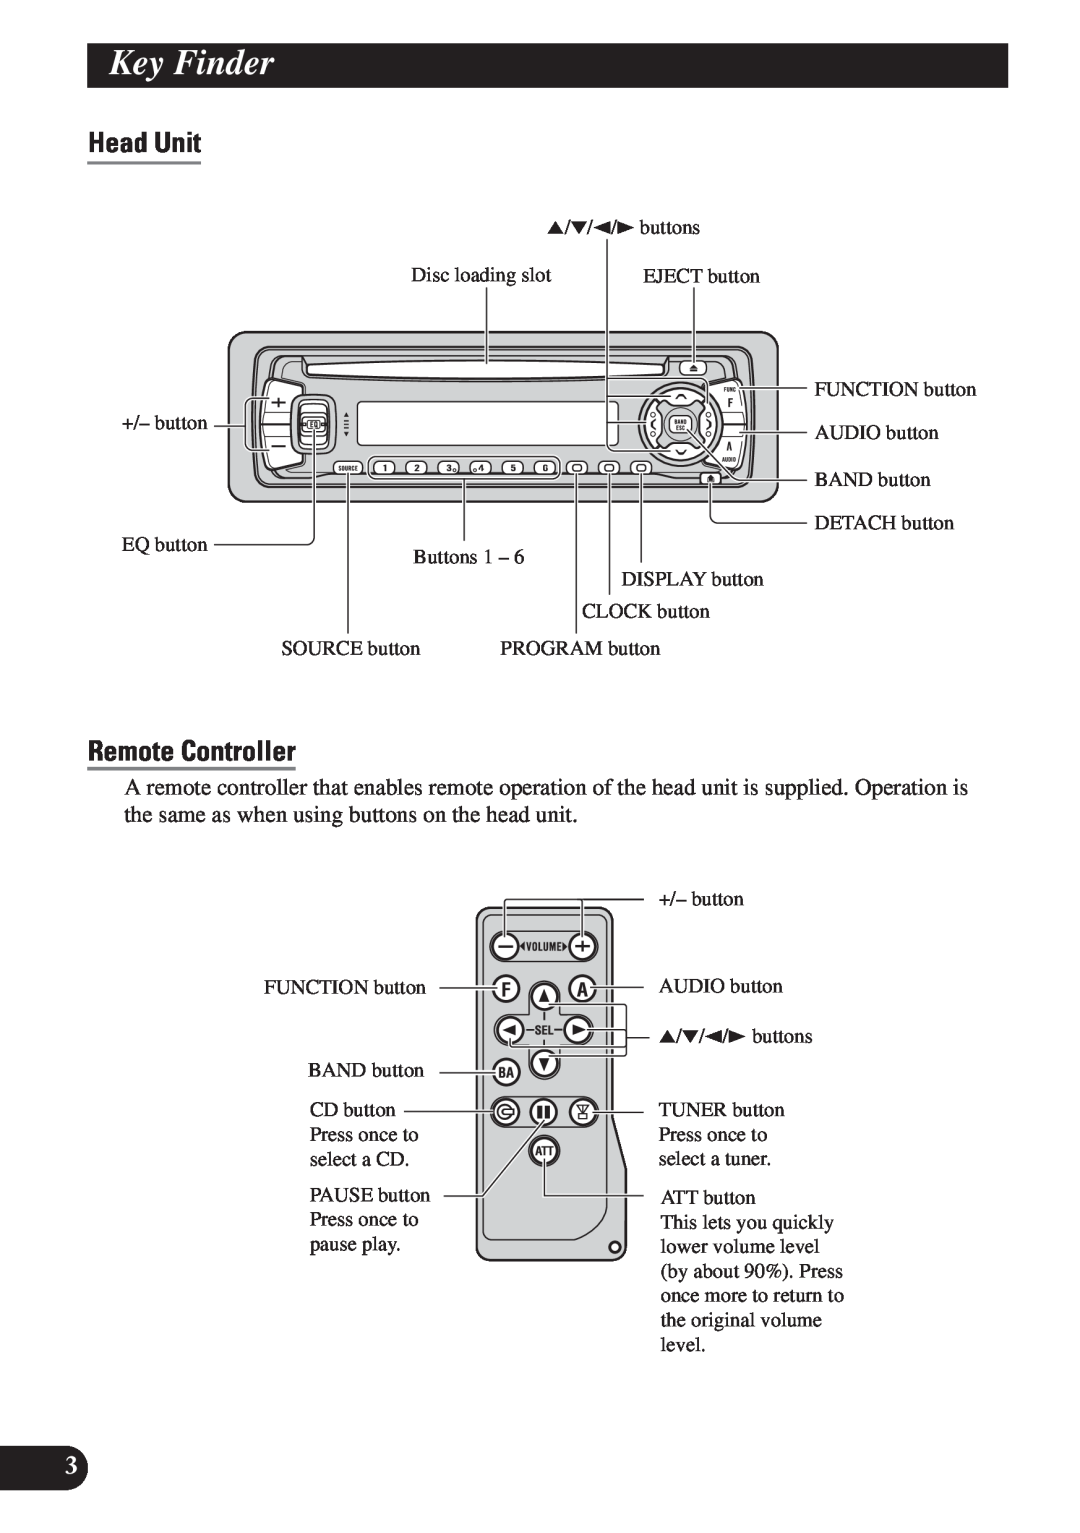 Pioneer DEH-P4150 operation manual Key Finder, Head Unit, Remote Controller 